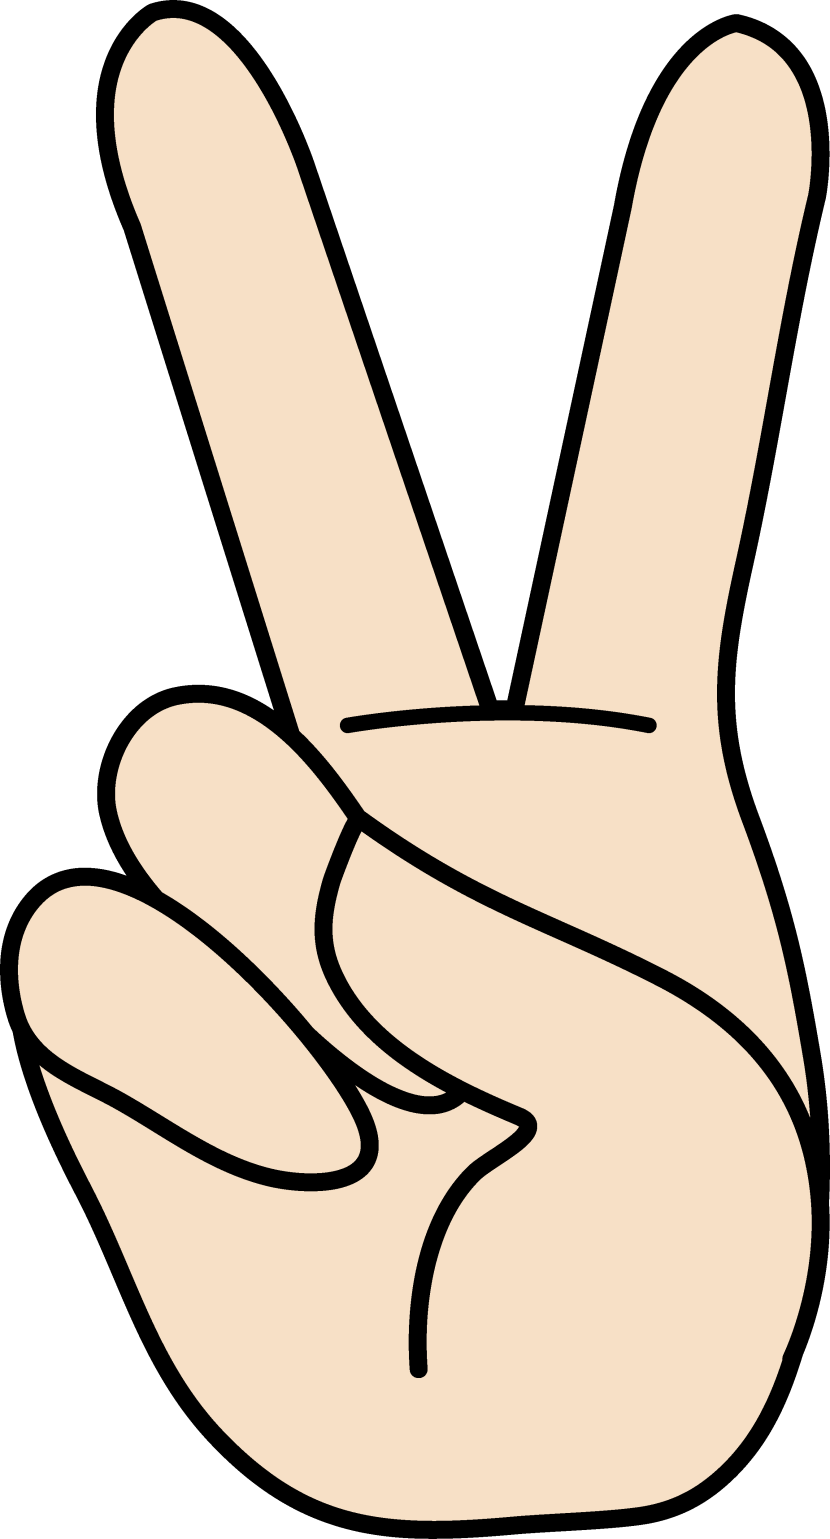 Peace sign clip art 3